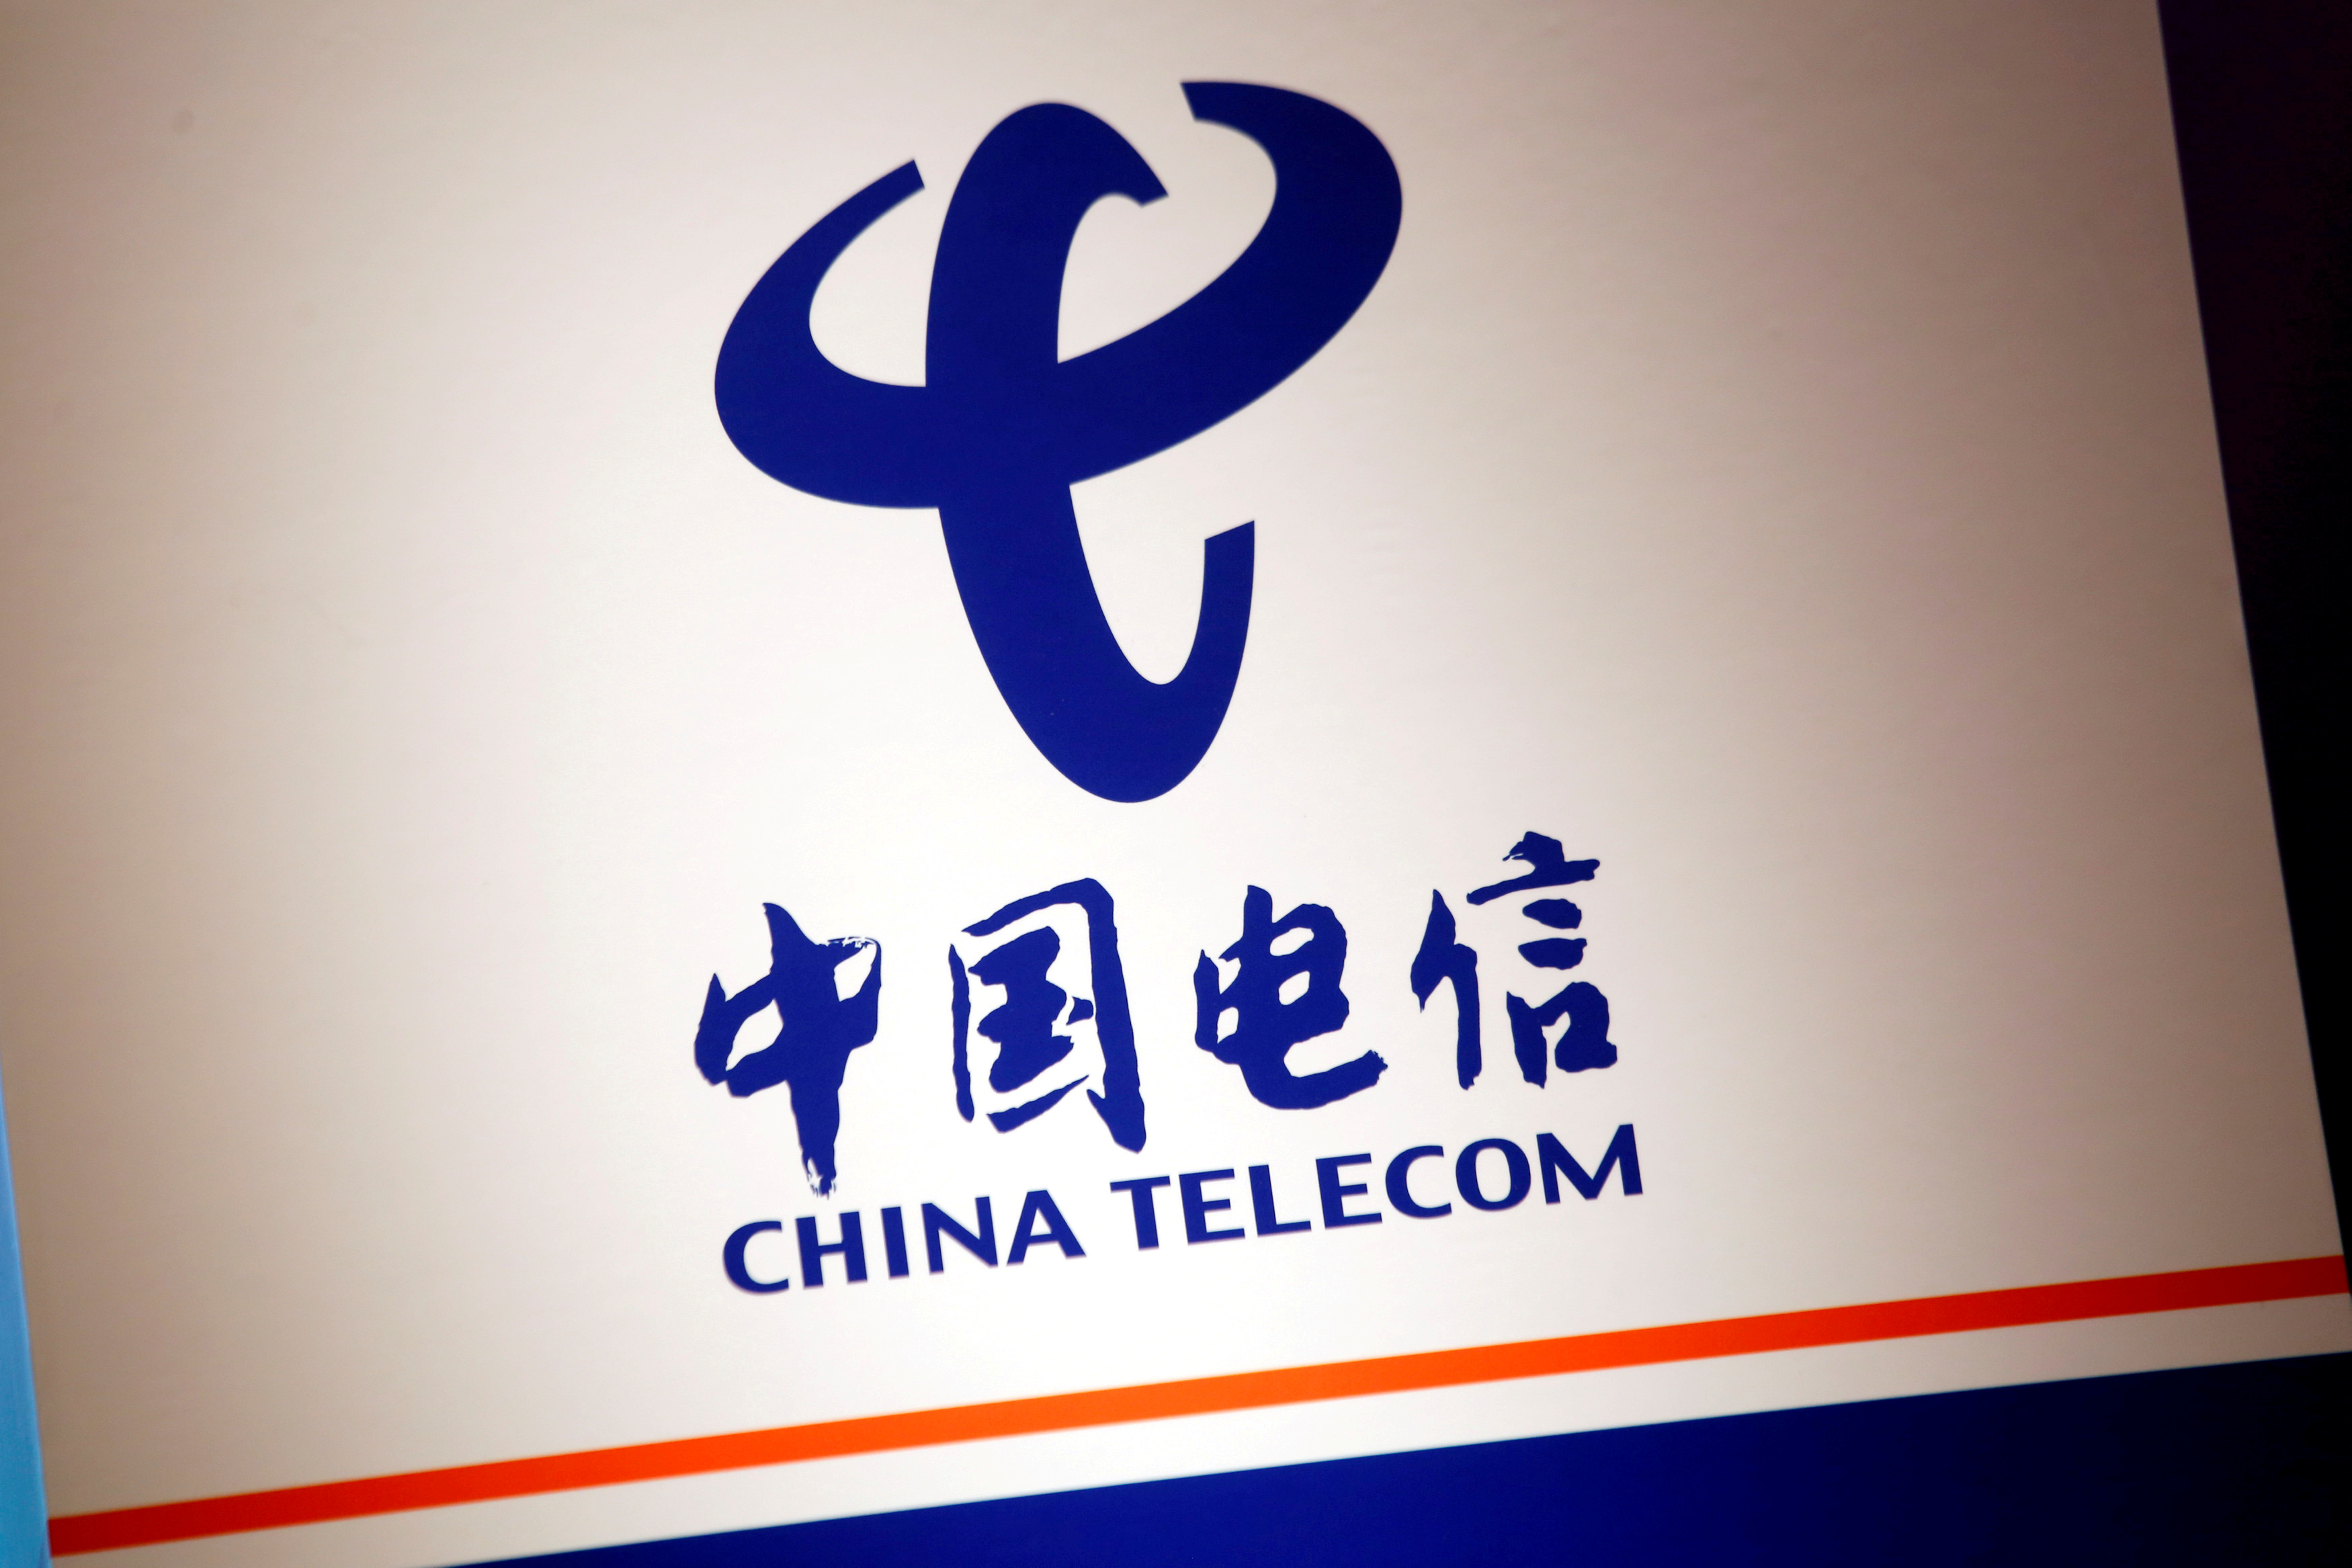 FILE PHOTO: The company logo of China Telecom is displayed at a news conference in Hong Kong